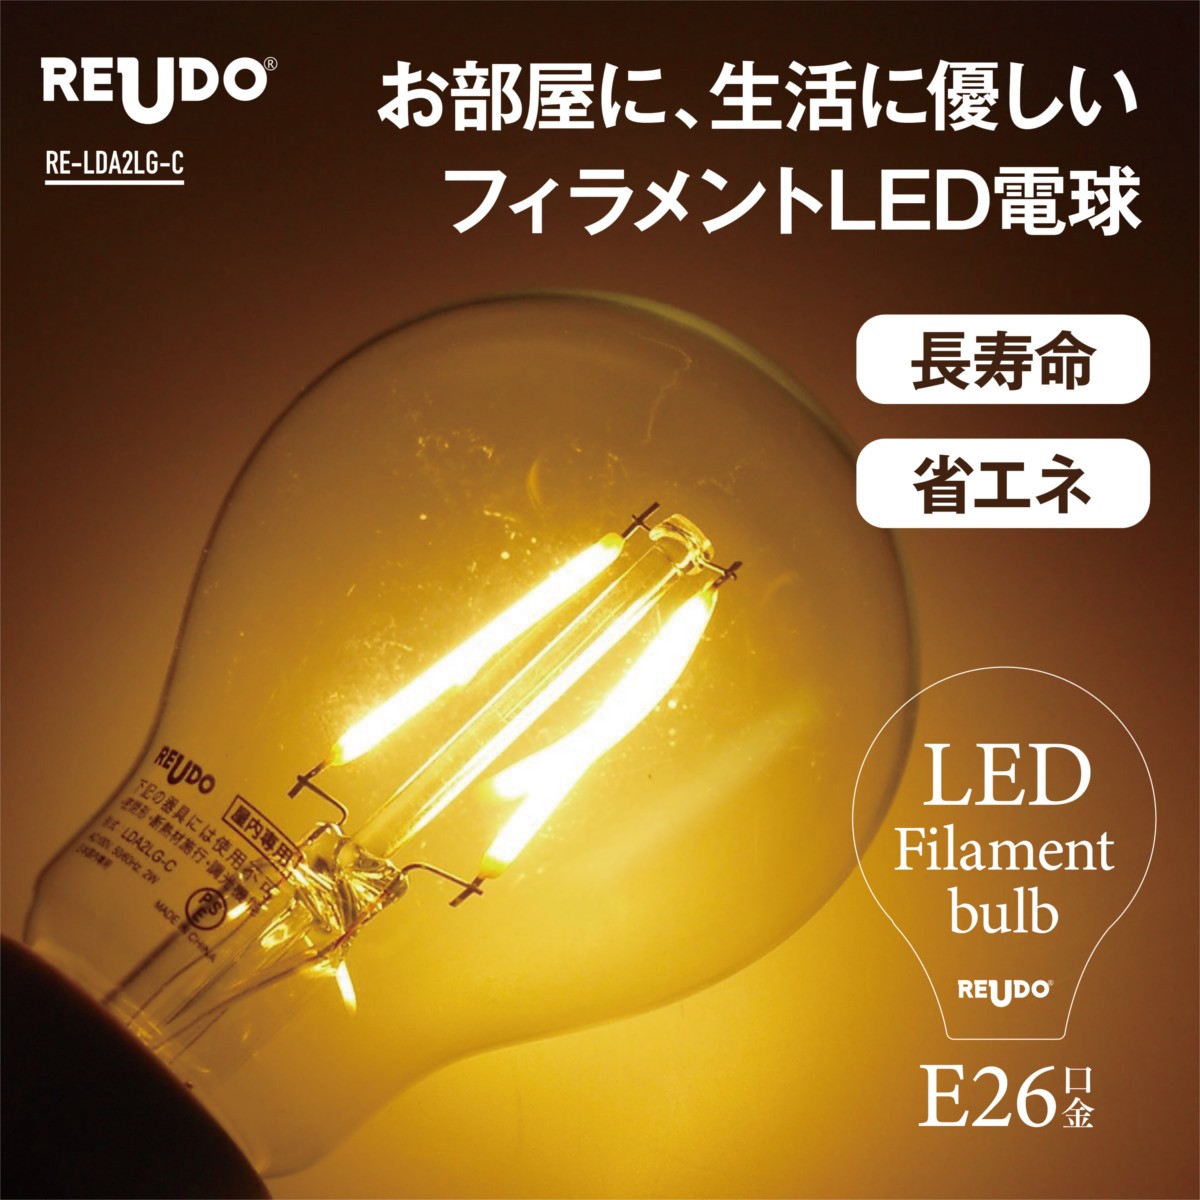 LED フィラメント 電球 クリアガラス 全方向タイプ E26口金 一般電球 